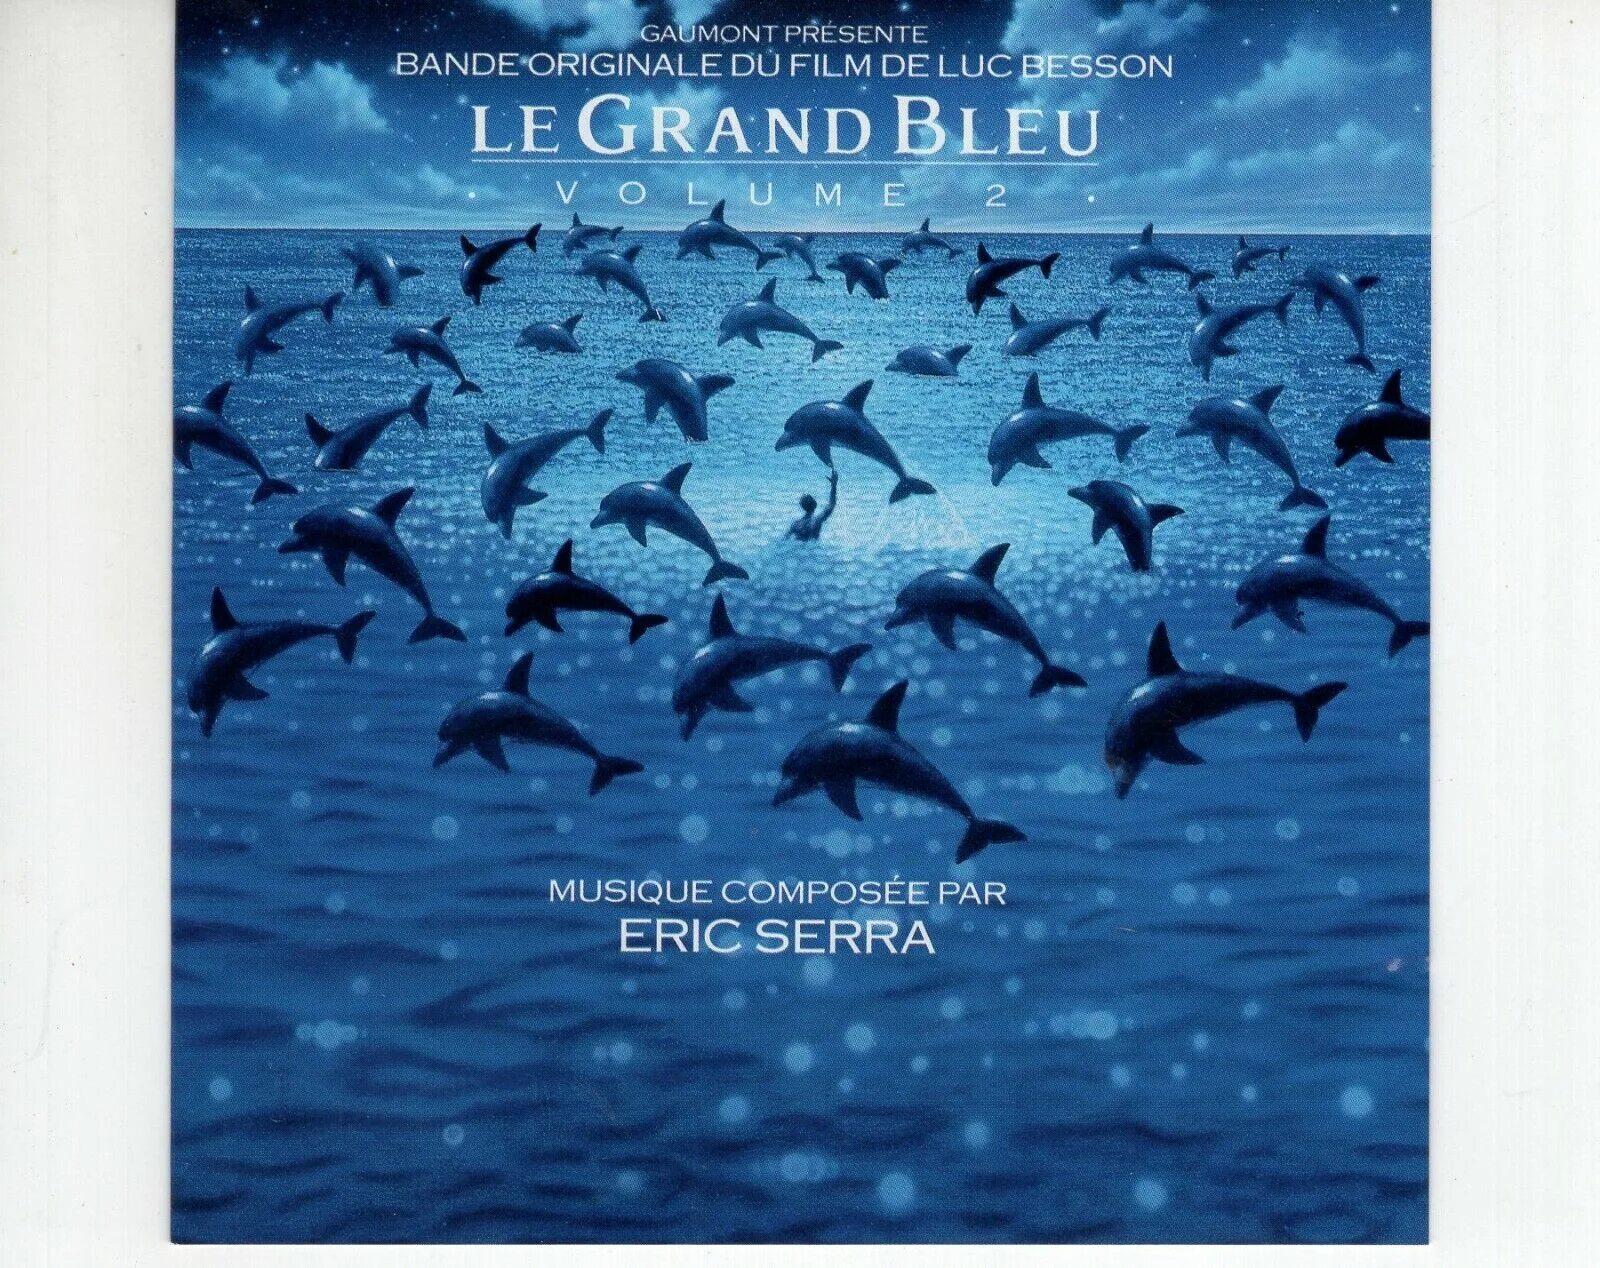 Le grand bleu. Голубая бездна Бессон Постер. Eric Serra. Le Grand bleu (CD). Розанна Аркетт голубая бездна. Le grande bleu бренд.